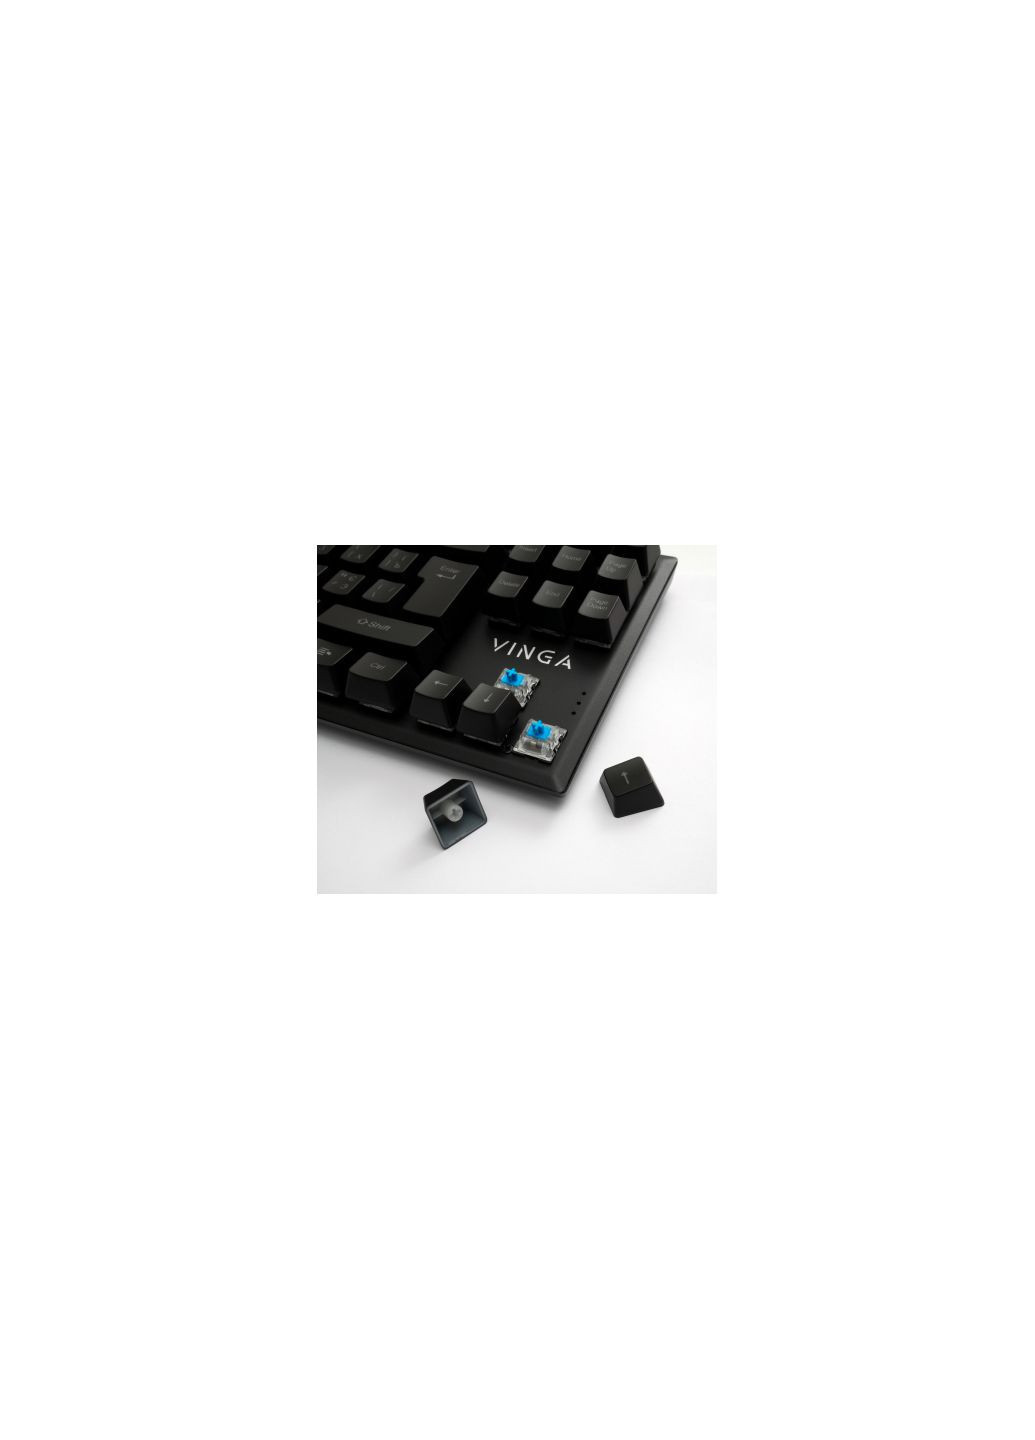 Клавиатура KBGM110 87 key LED Blue Switch USB Black (KBGM-110 Black) Vinga kbgm-110 87 key led blue switch usb black (276707531)